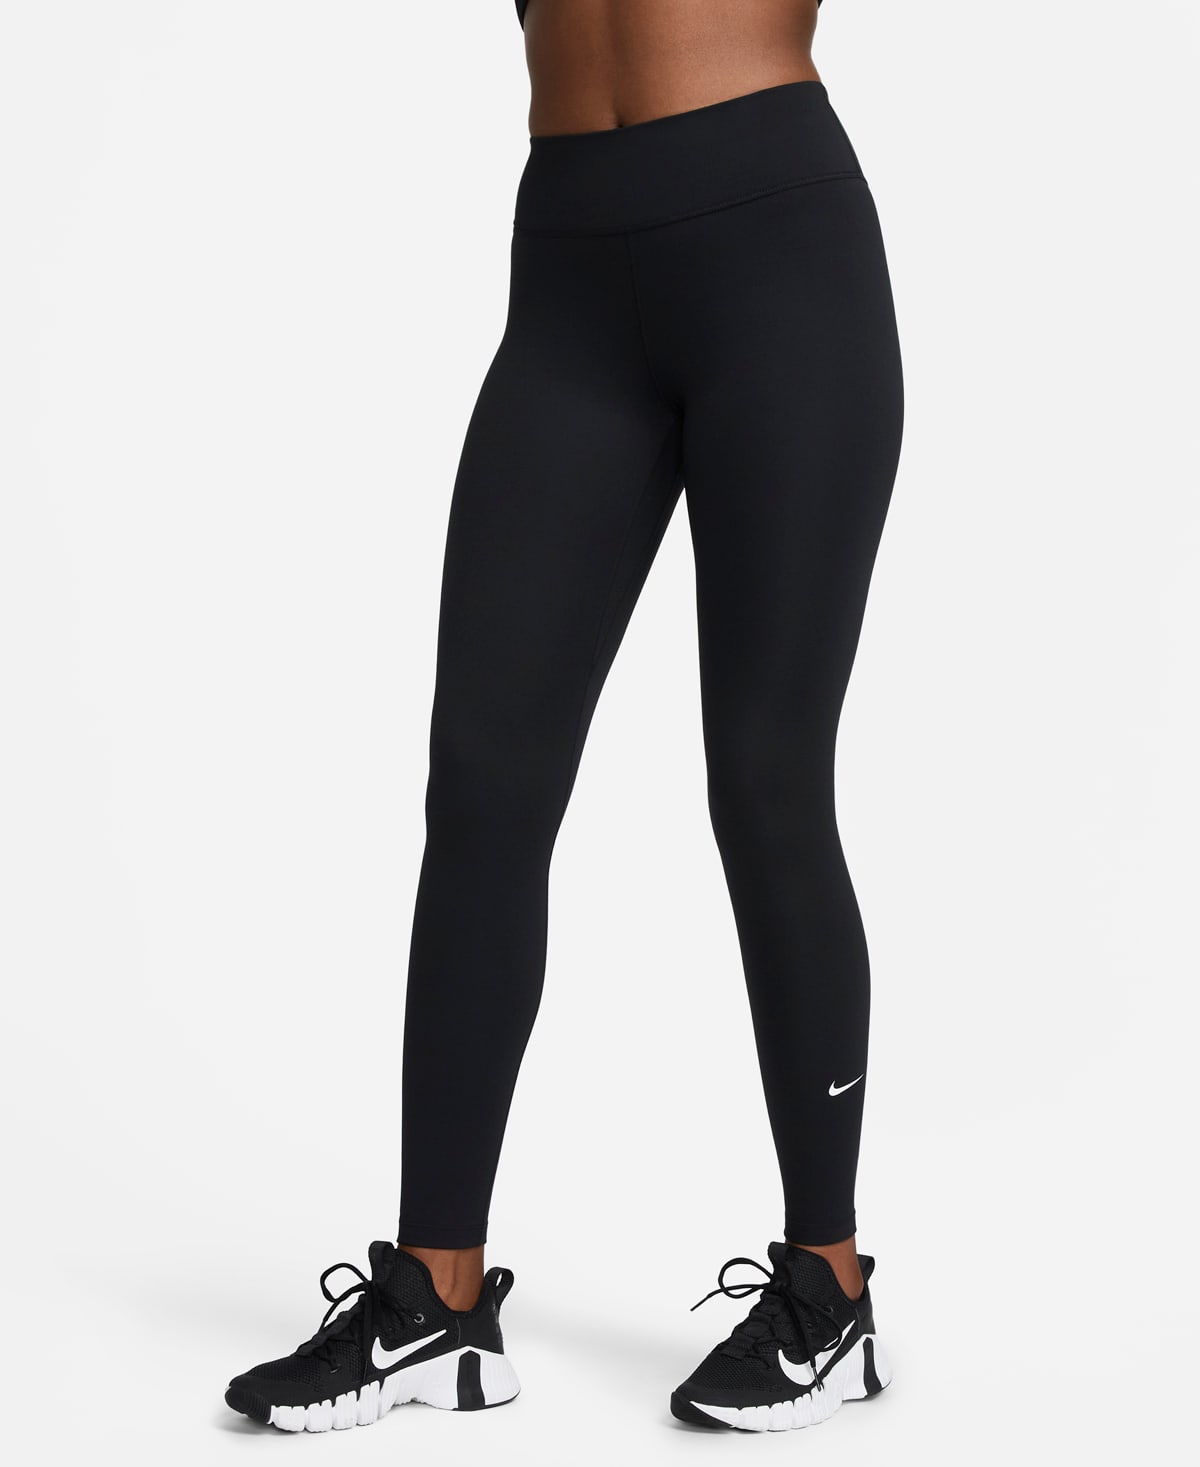 Women's Leggings (Asian Sizing) Size Nike.com